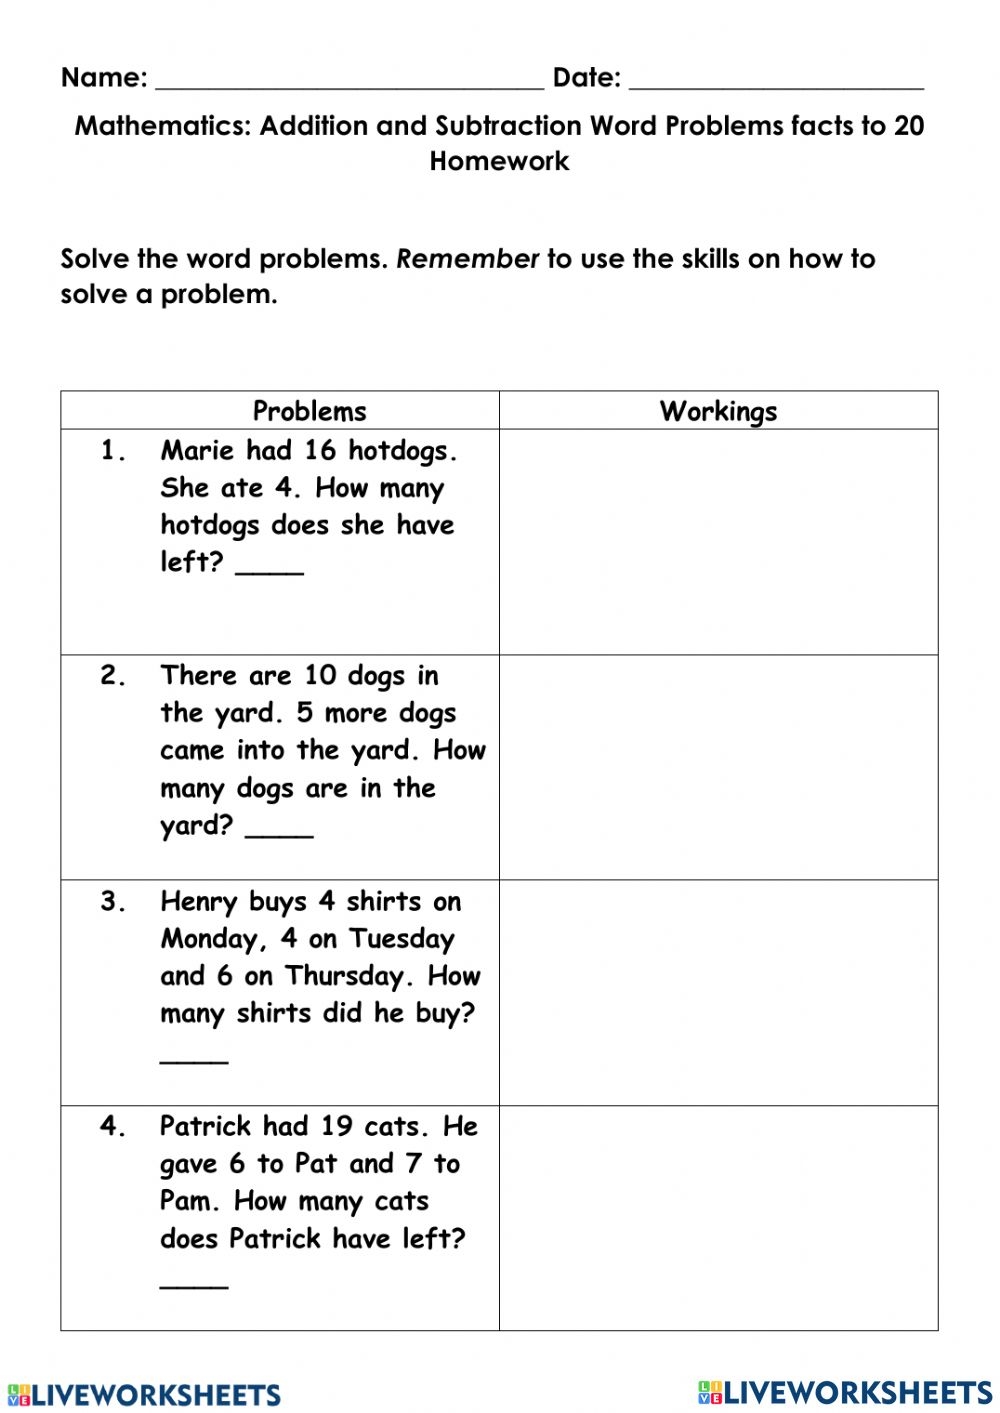 Math Statement Problems Worksheet Math Worksheet Answers